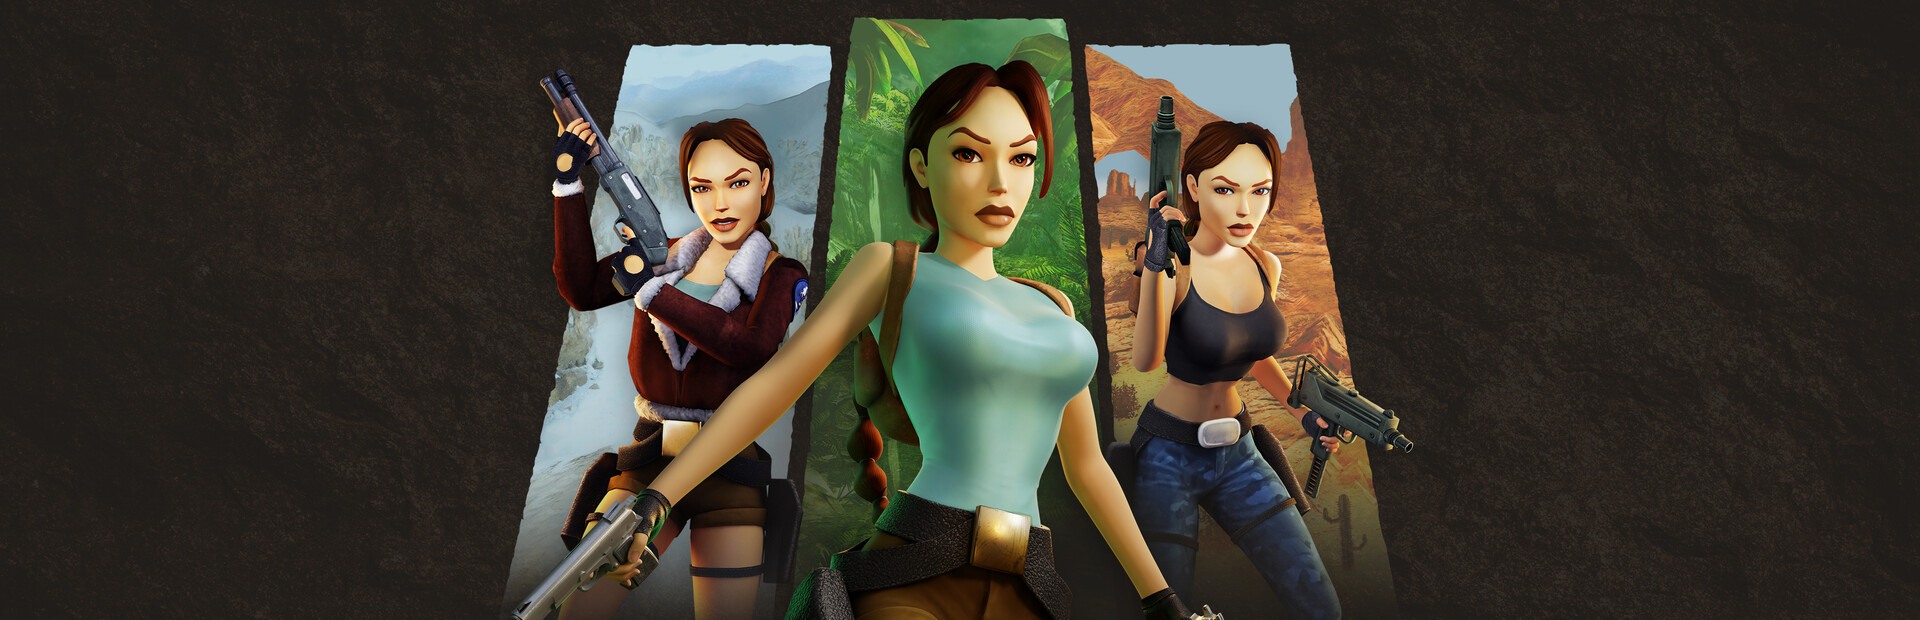 Tomb Raider I-III Remastered Starring Lara Croft cover image